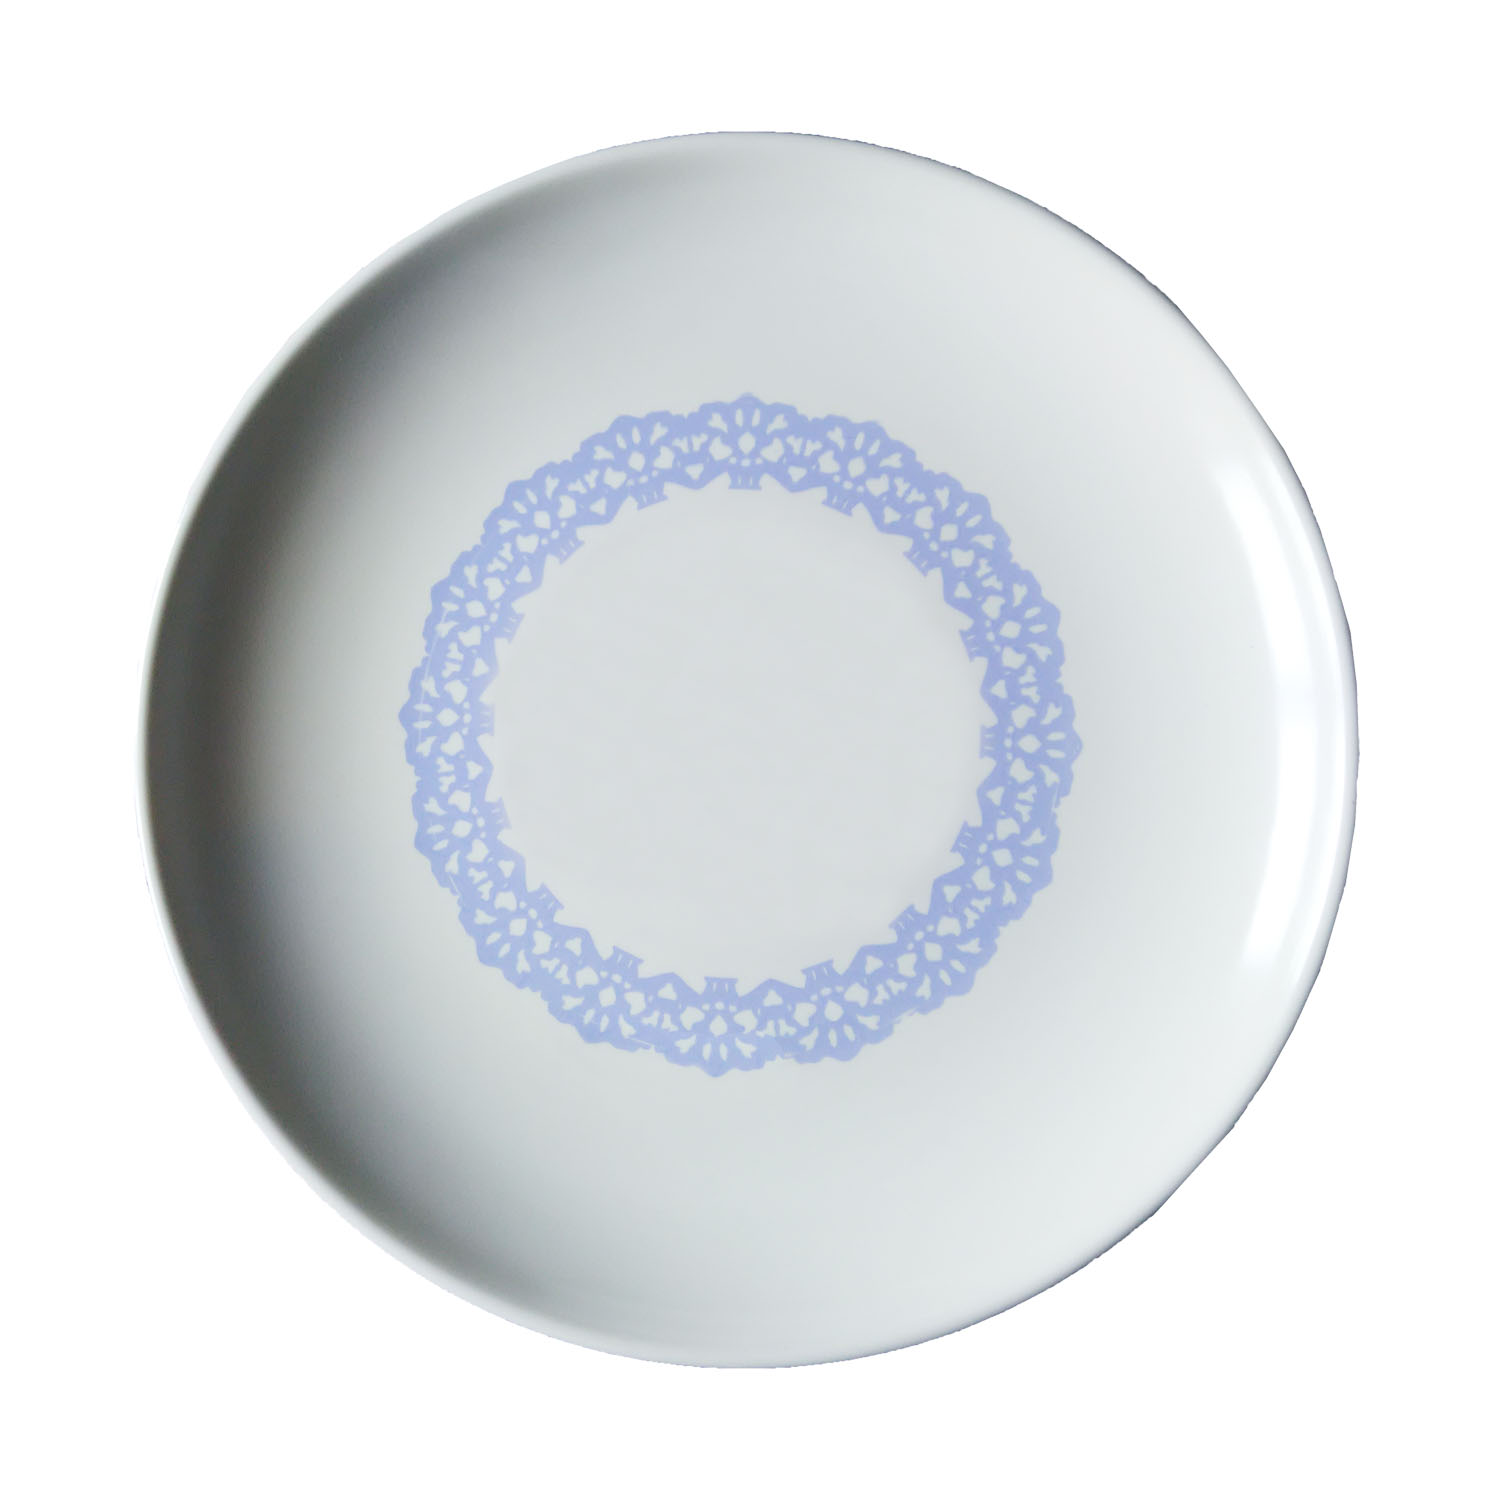 GL-AAA1165 10 Inch White Melamine Dinner Plate High Quality